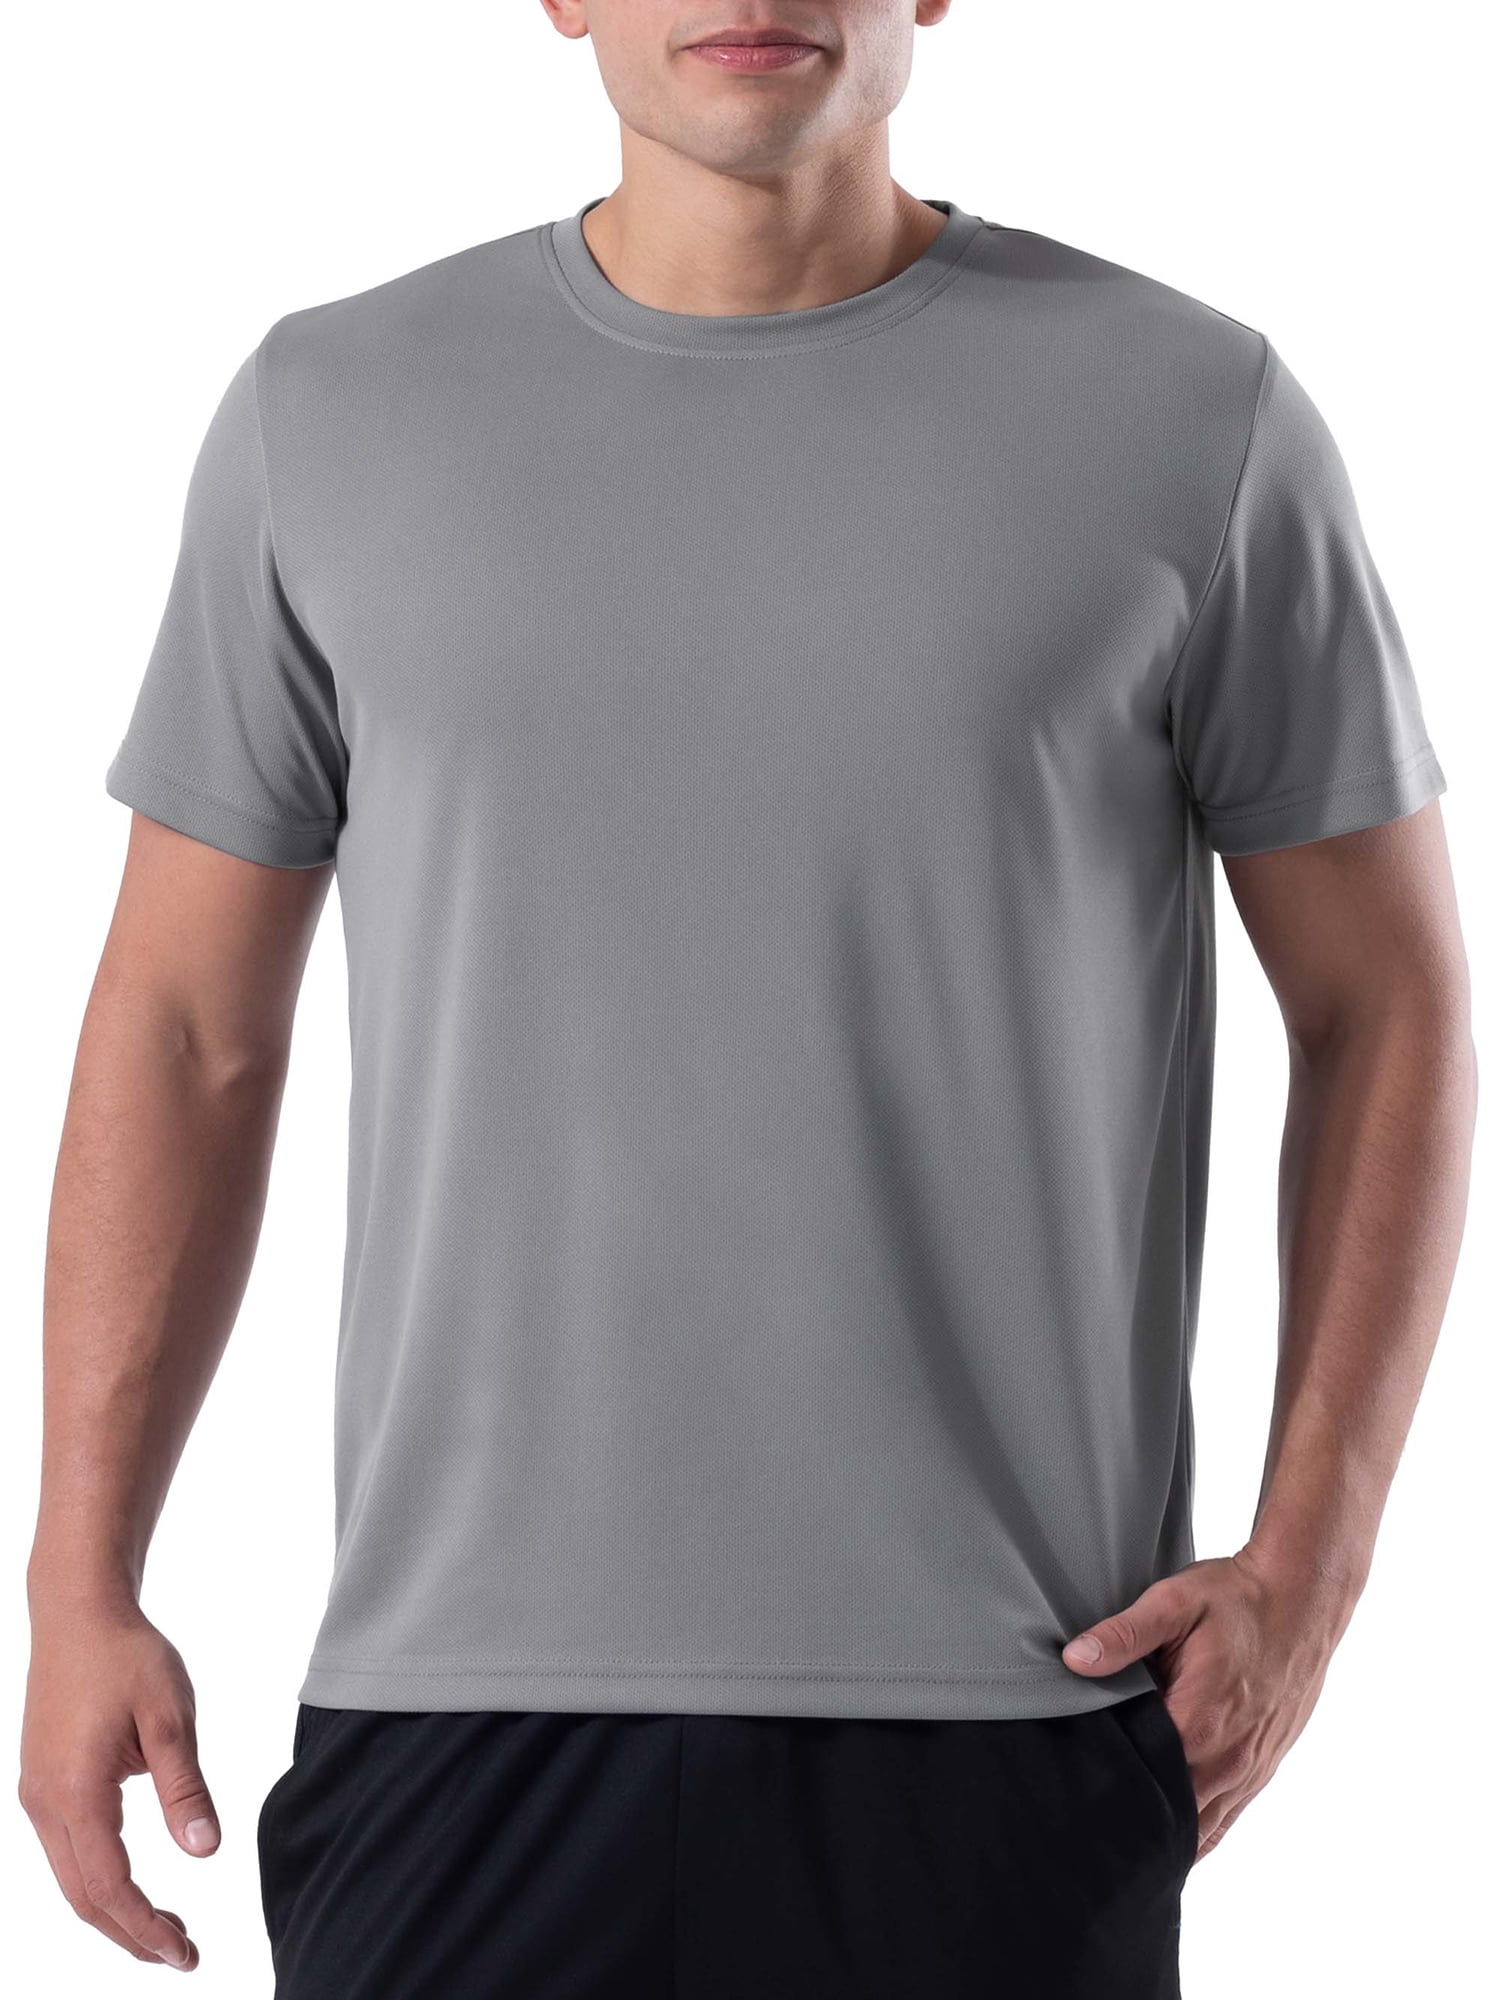 Validering forurening hvile Athletic Works Men's Active Core Short Sleeve T-Shirt, Size S-3XL -  Walmart.com